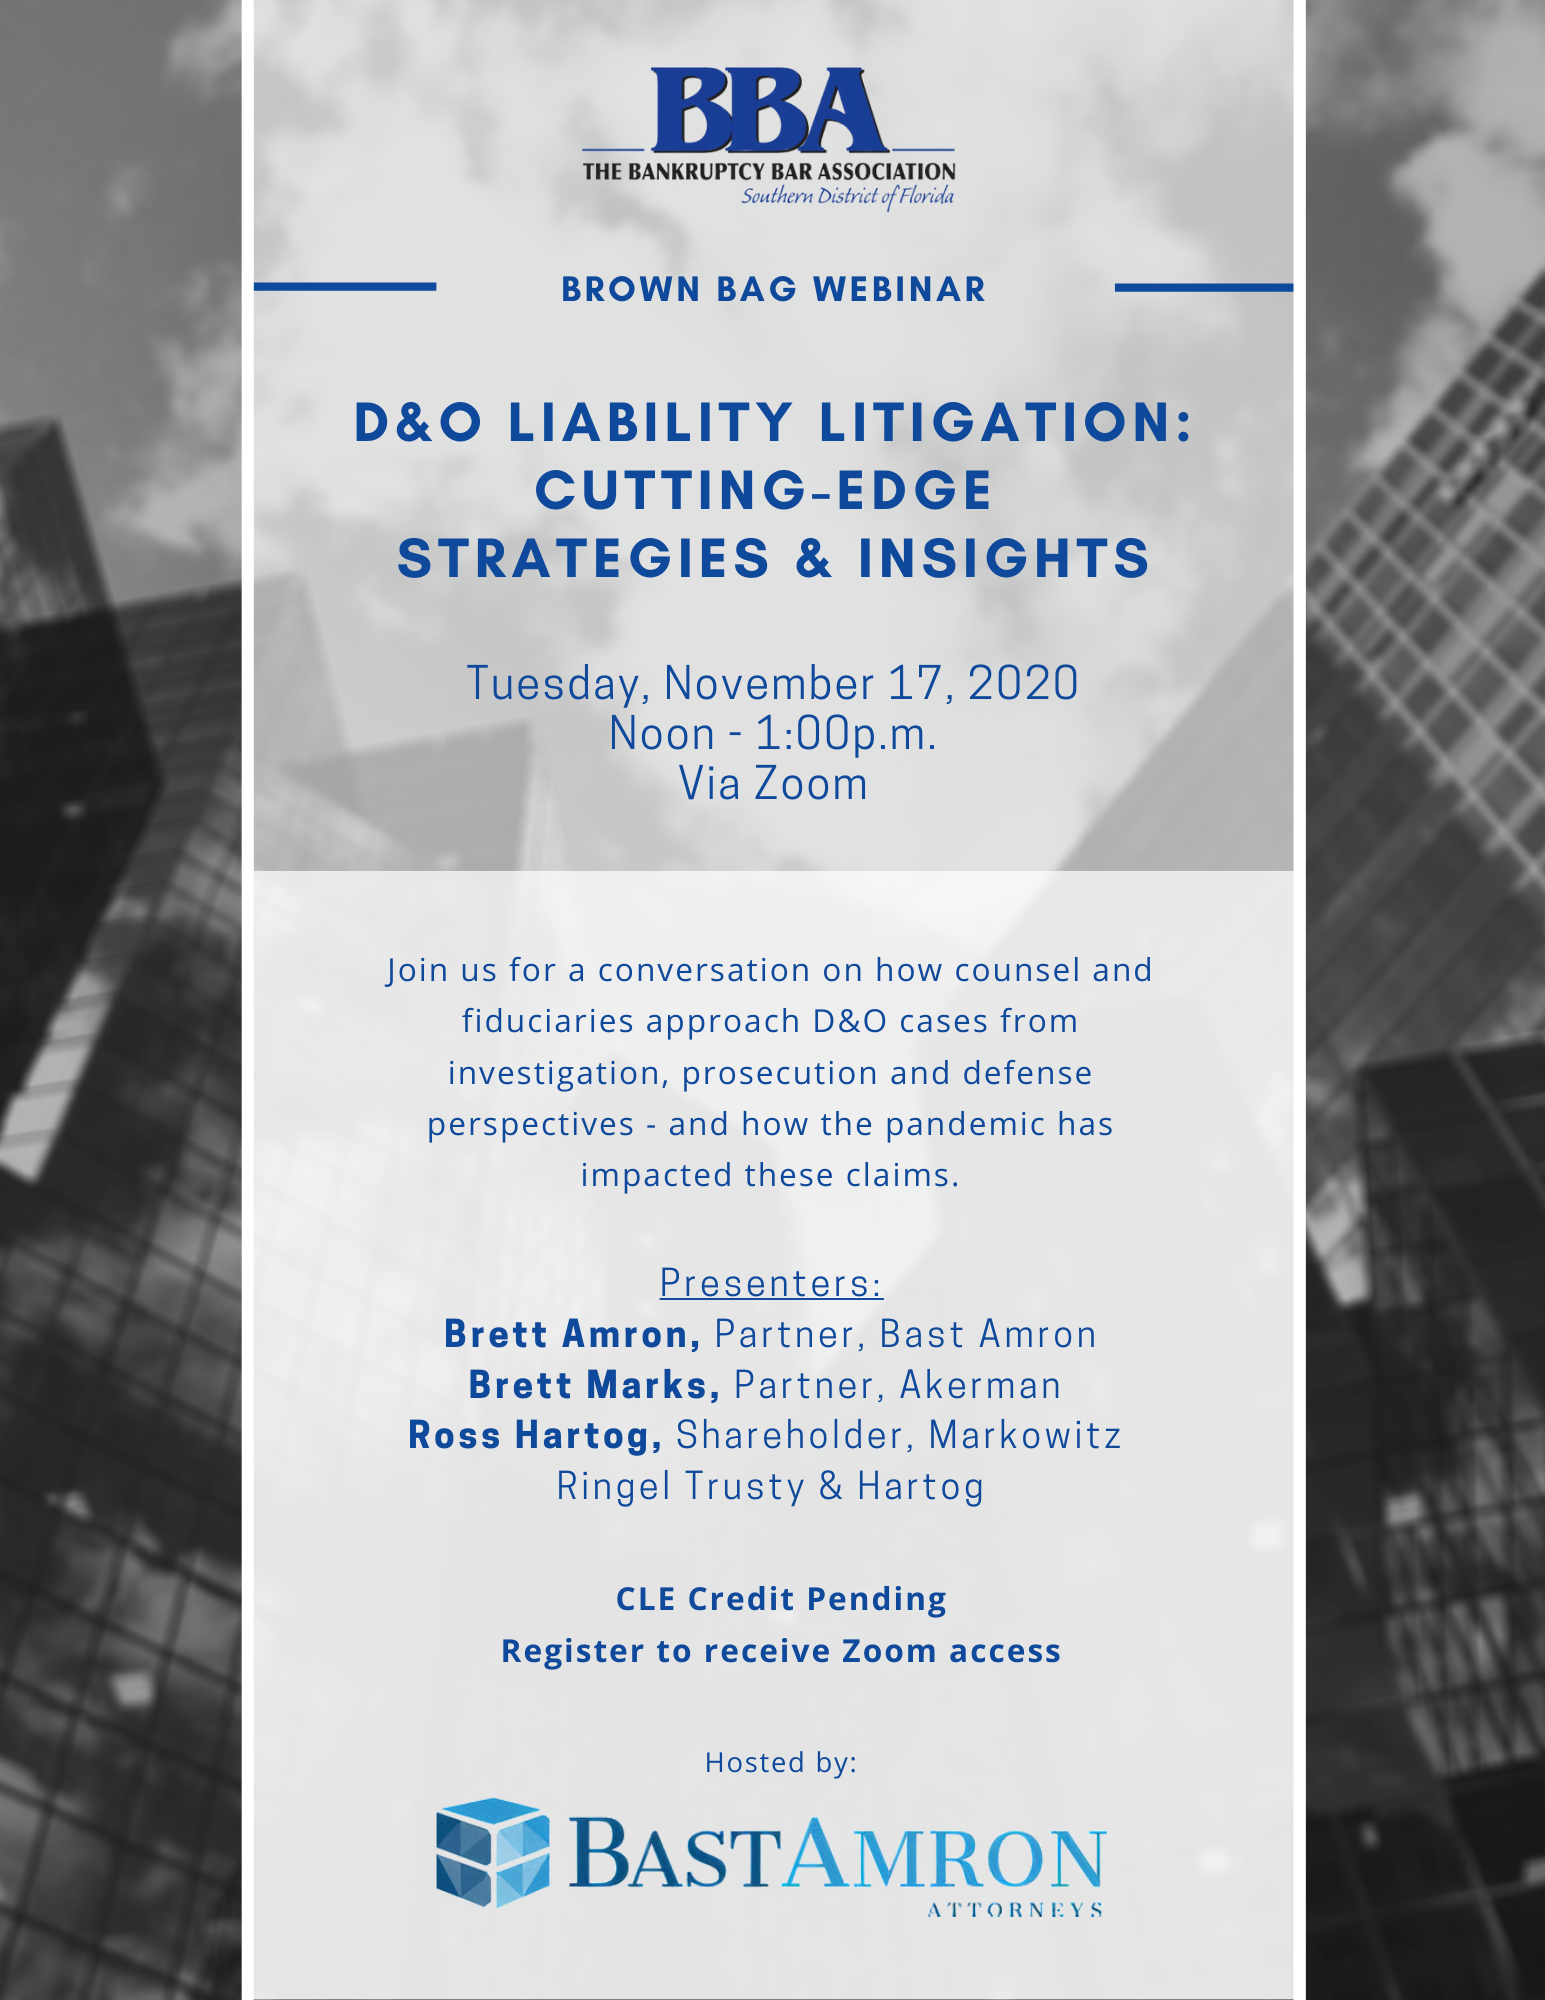 Brown Bag Webinar: D&O Liability Litigation: Cutting-Edge Strategies & Insights